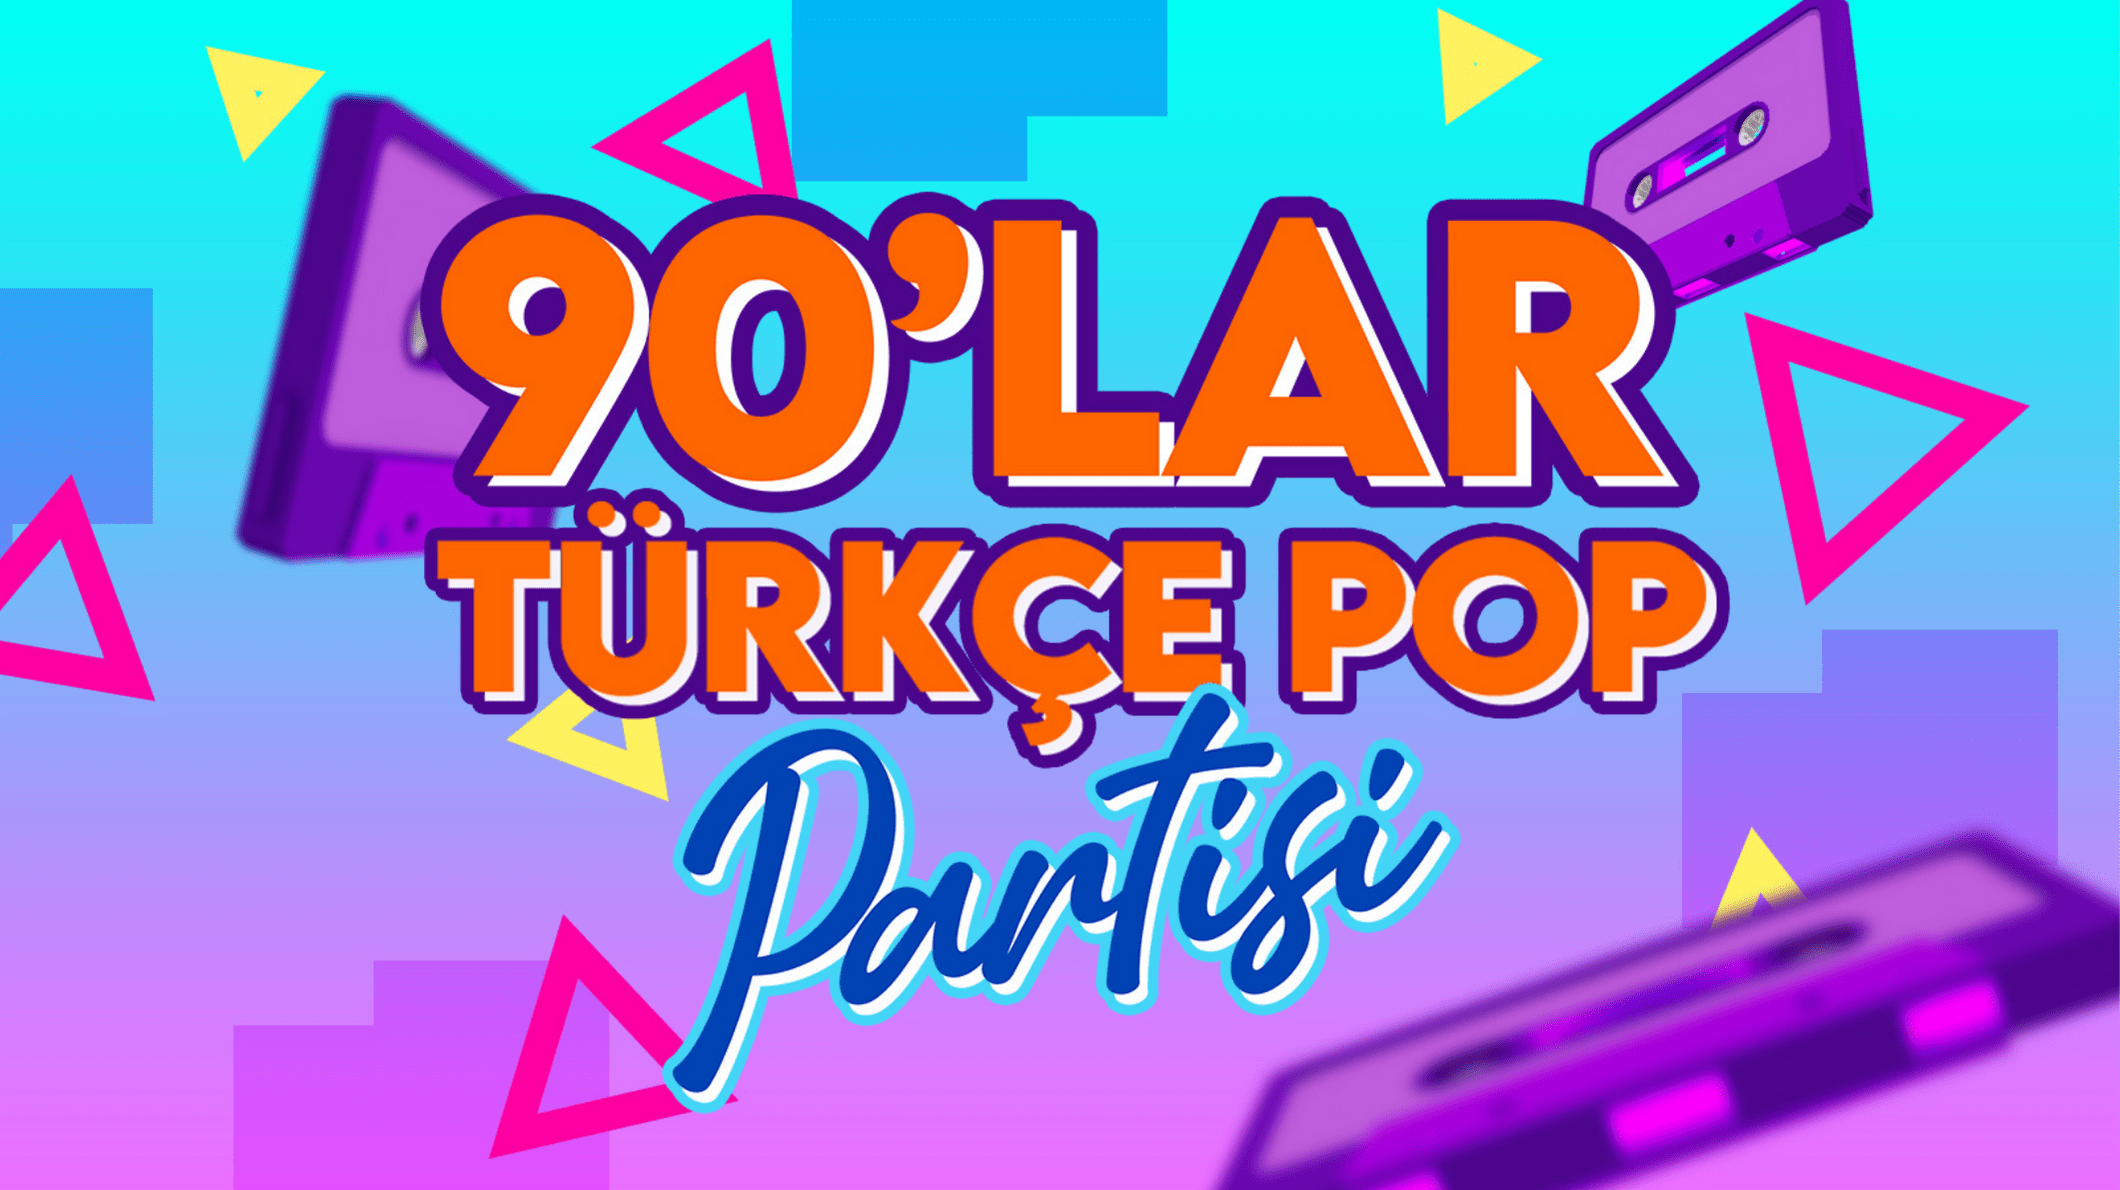 90'lar Türkçe Pop Partisi - IF Performance Hall Tunus - Ankara